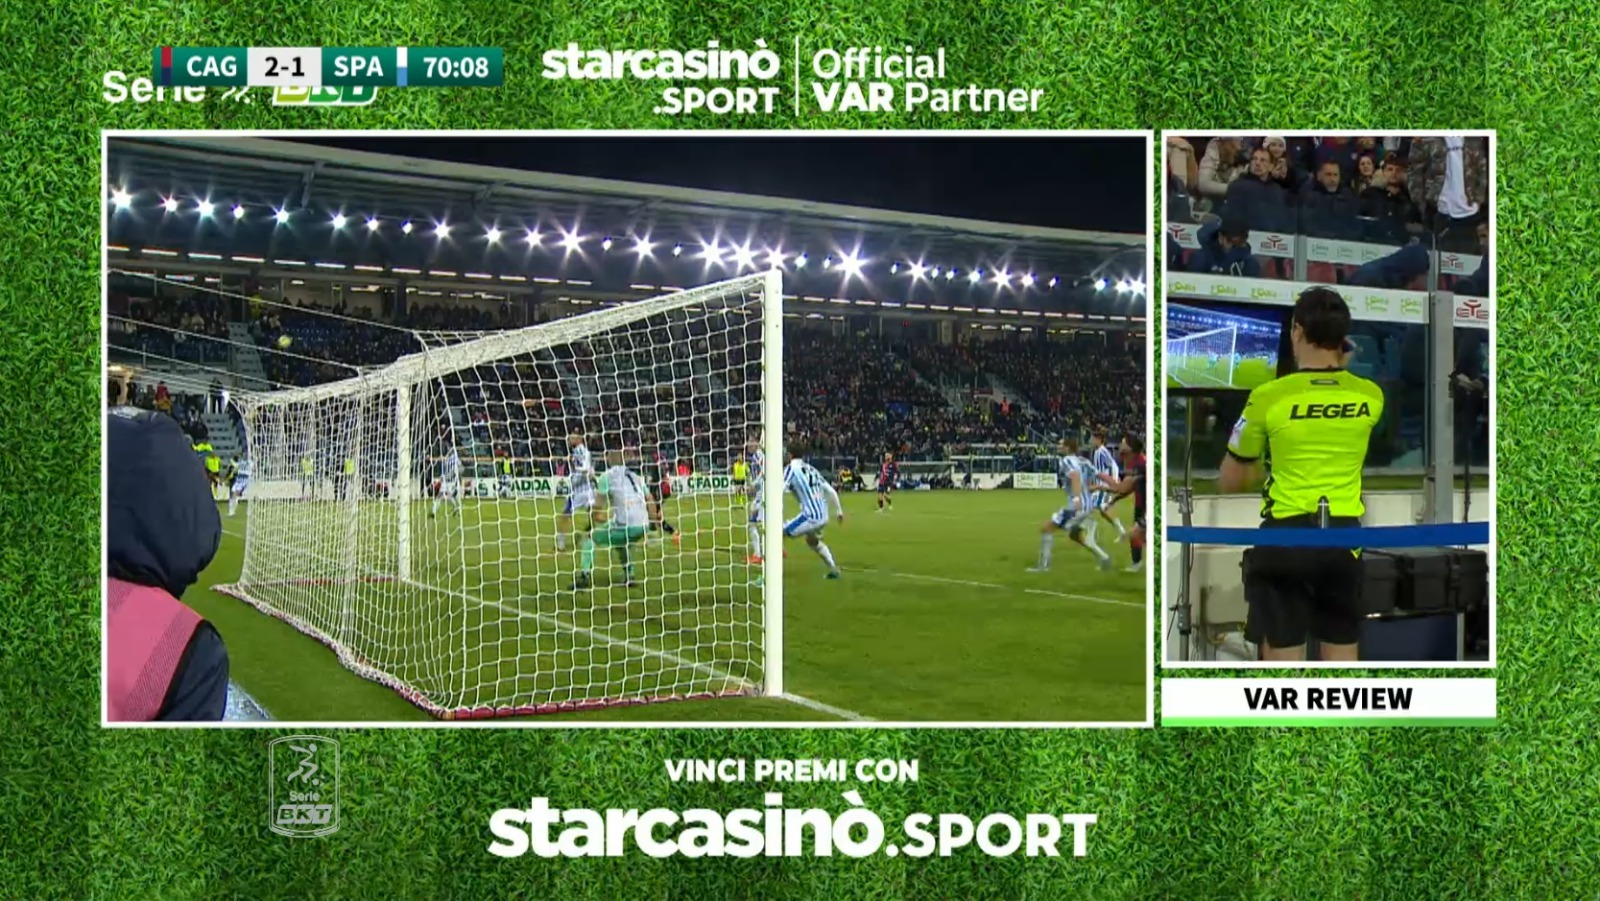 StarCasino.Sport VAR Partner